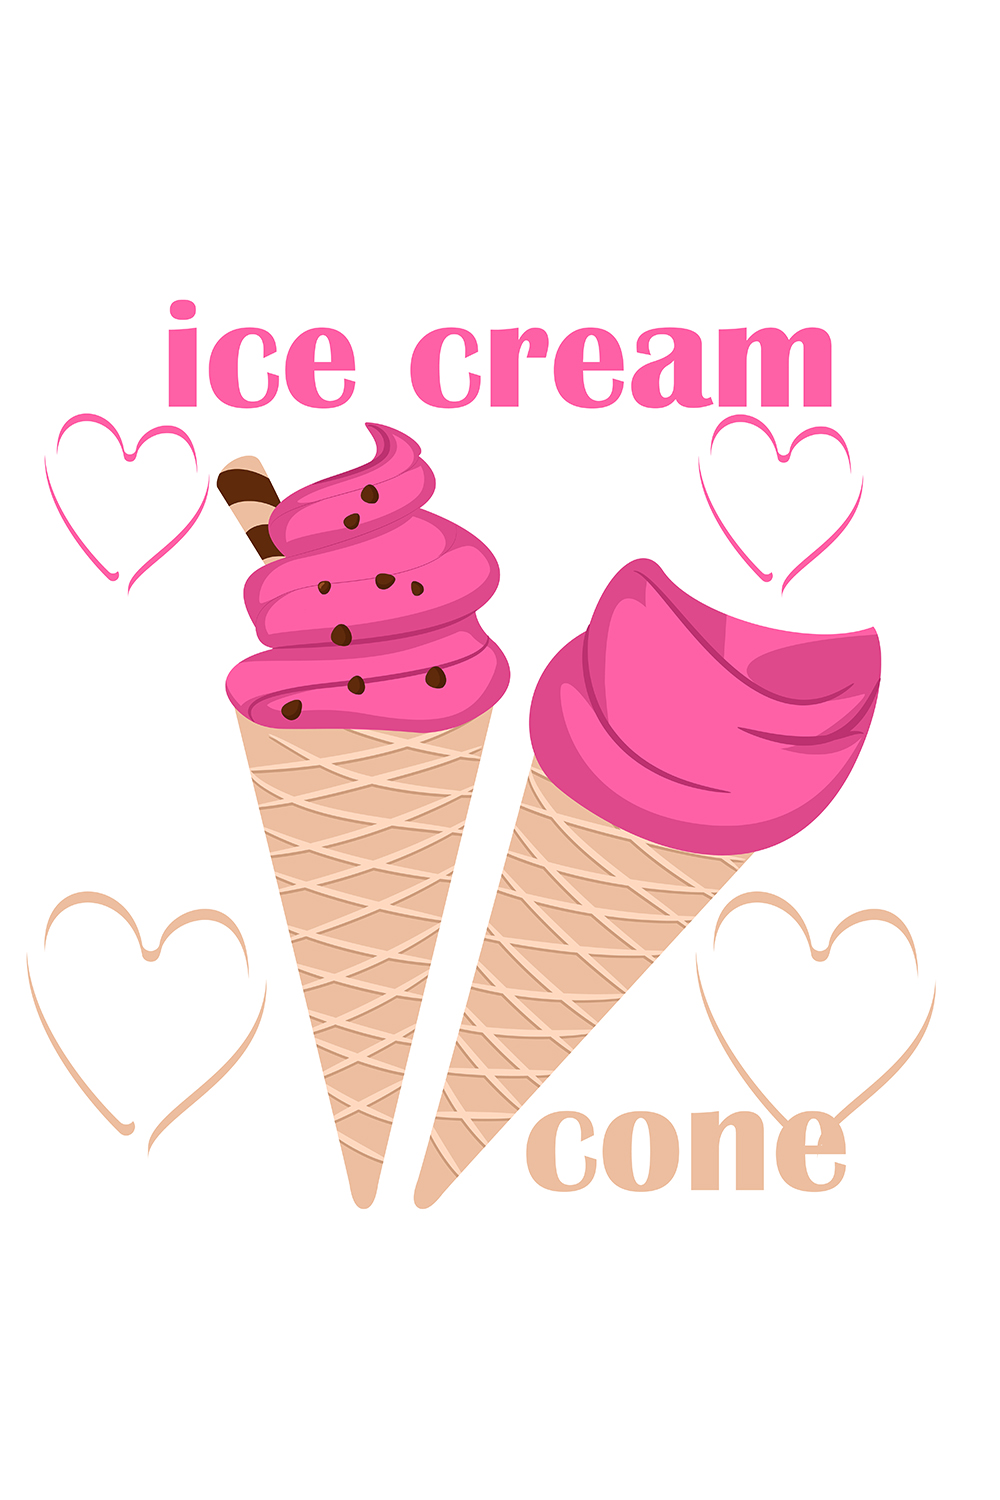 Ice cream cone, Ice cream in a waffle cone 2 templates pinterest preview image.